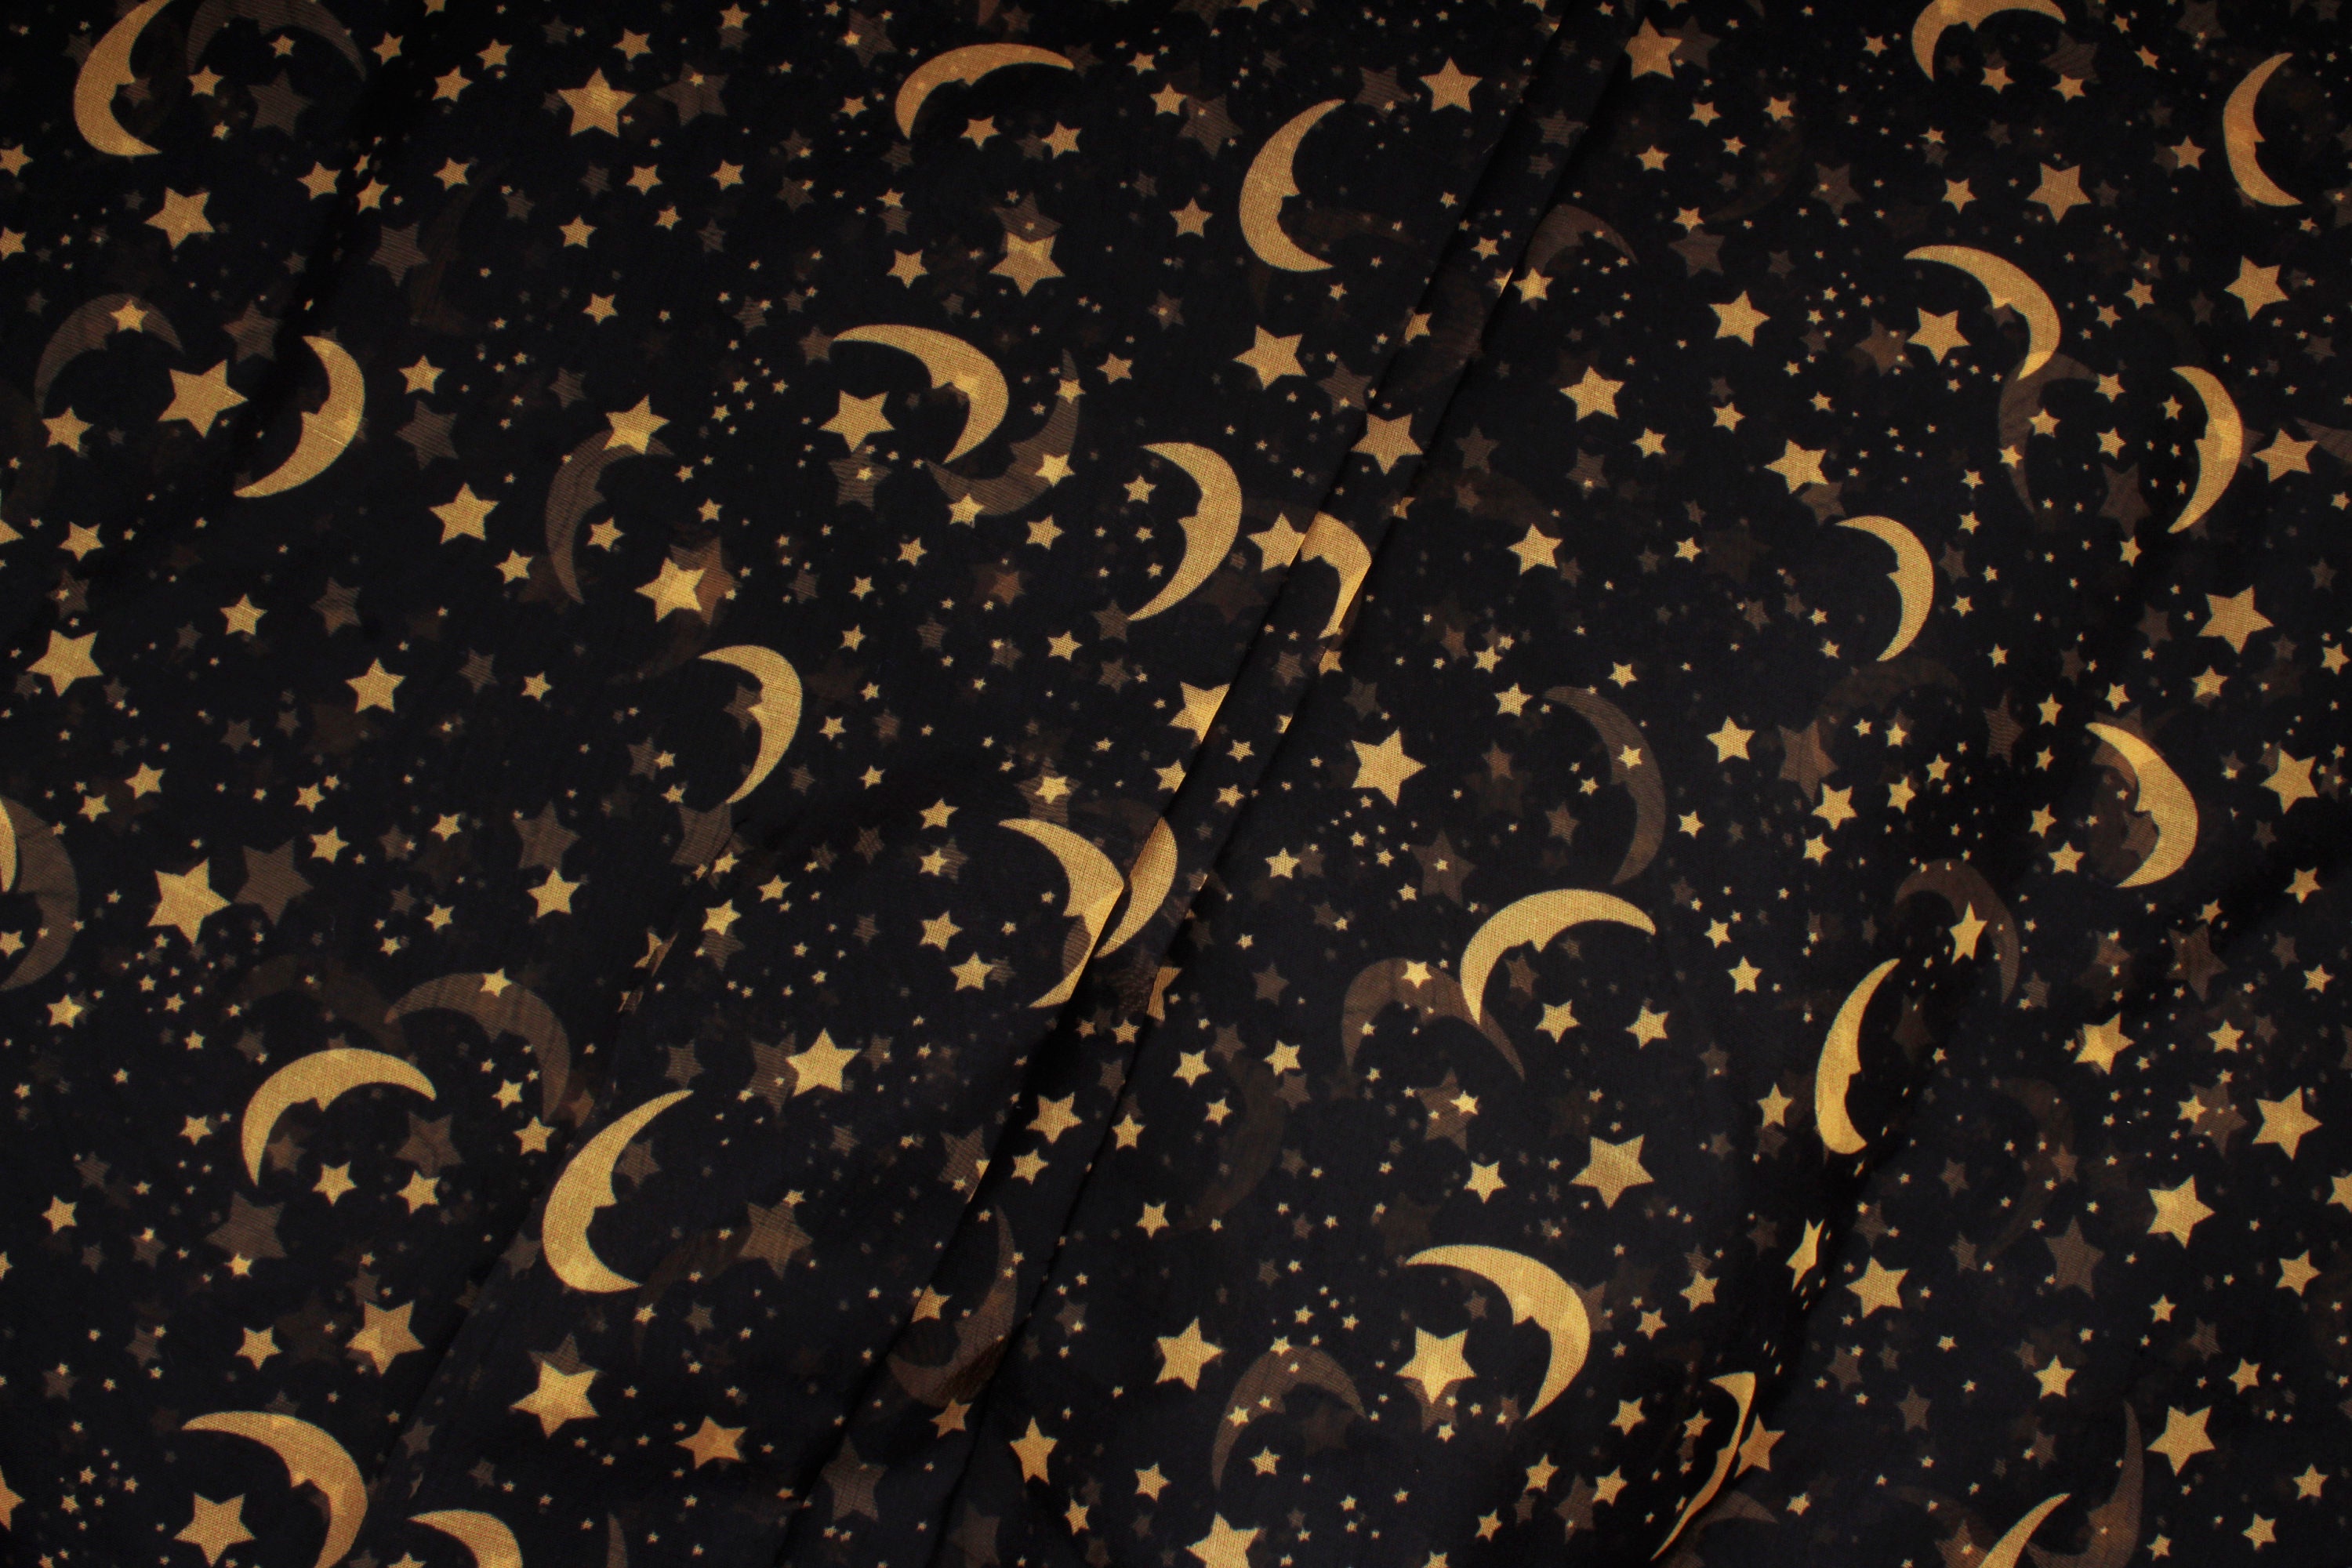 Black Celestial Fabric Star Print Fabric Sheer Organza | Etsy